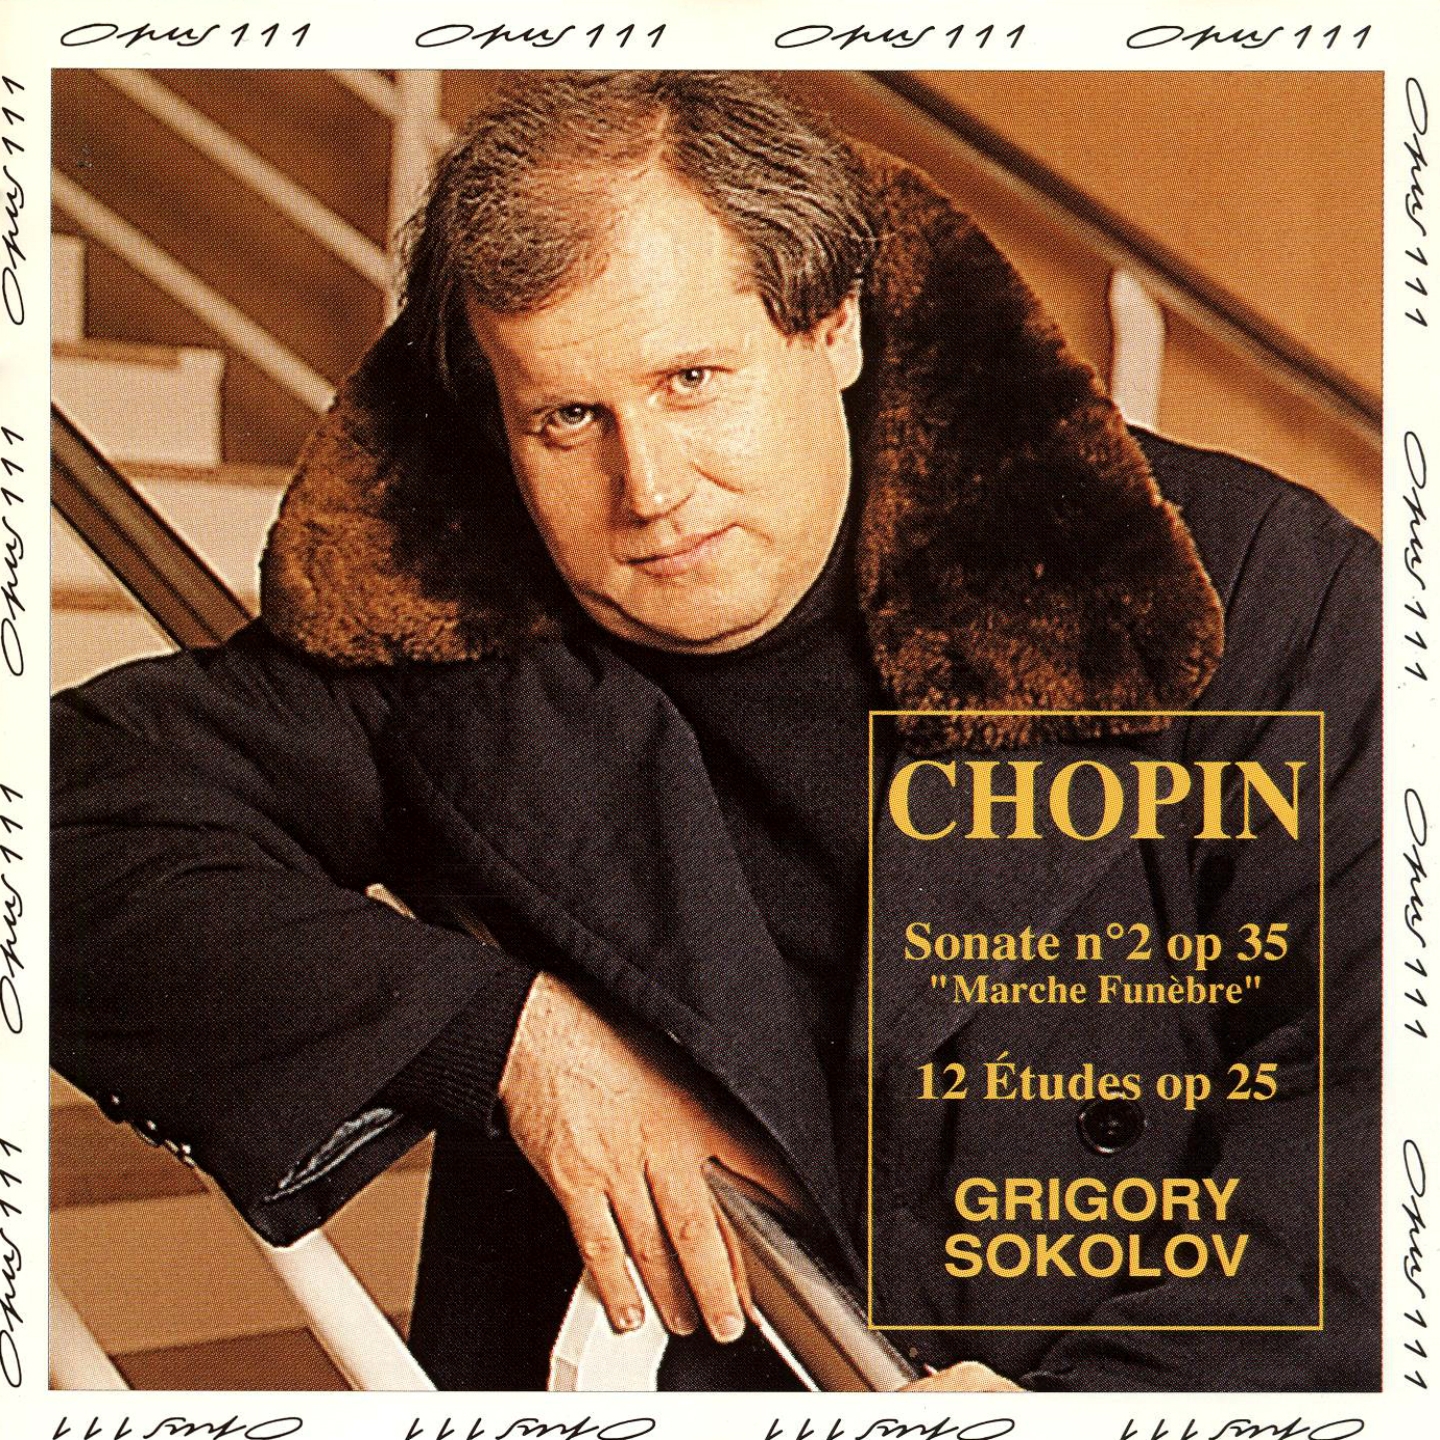 Chopin: Sonate No. 2, Op 35 & 12 études, Op. 25